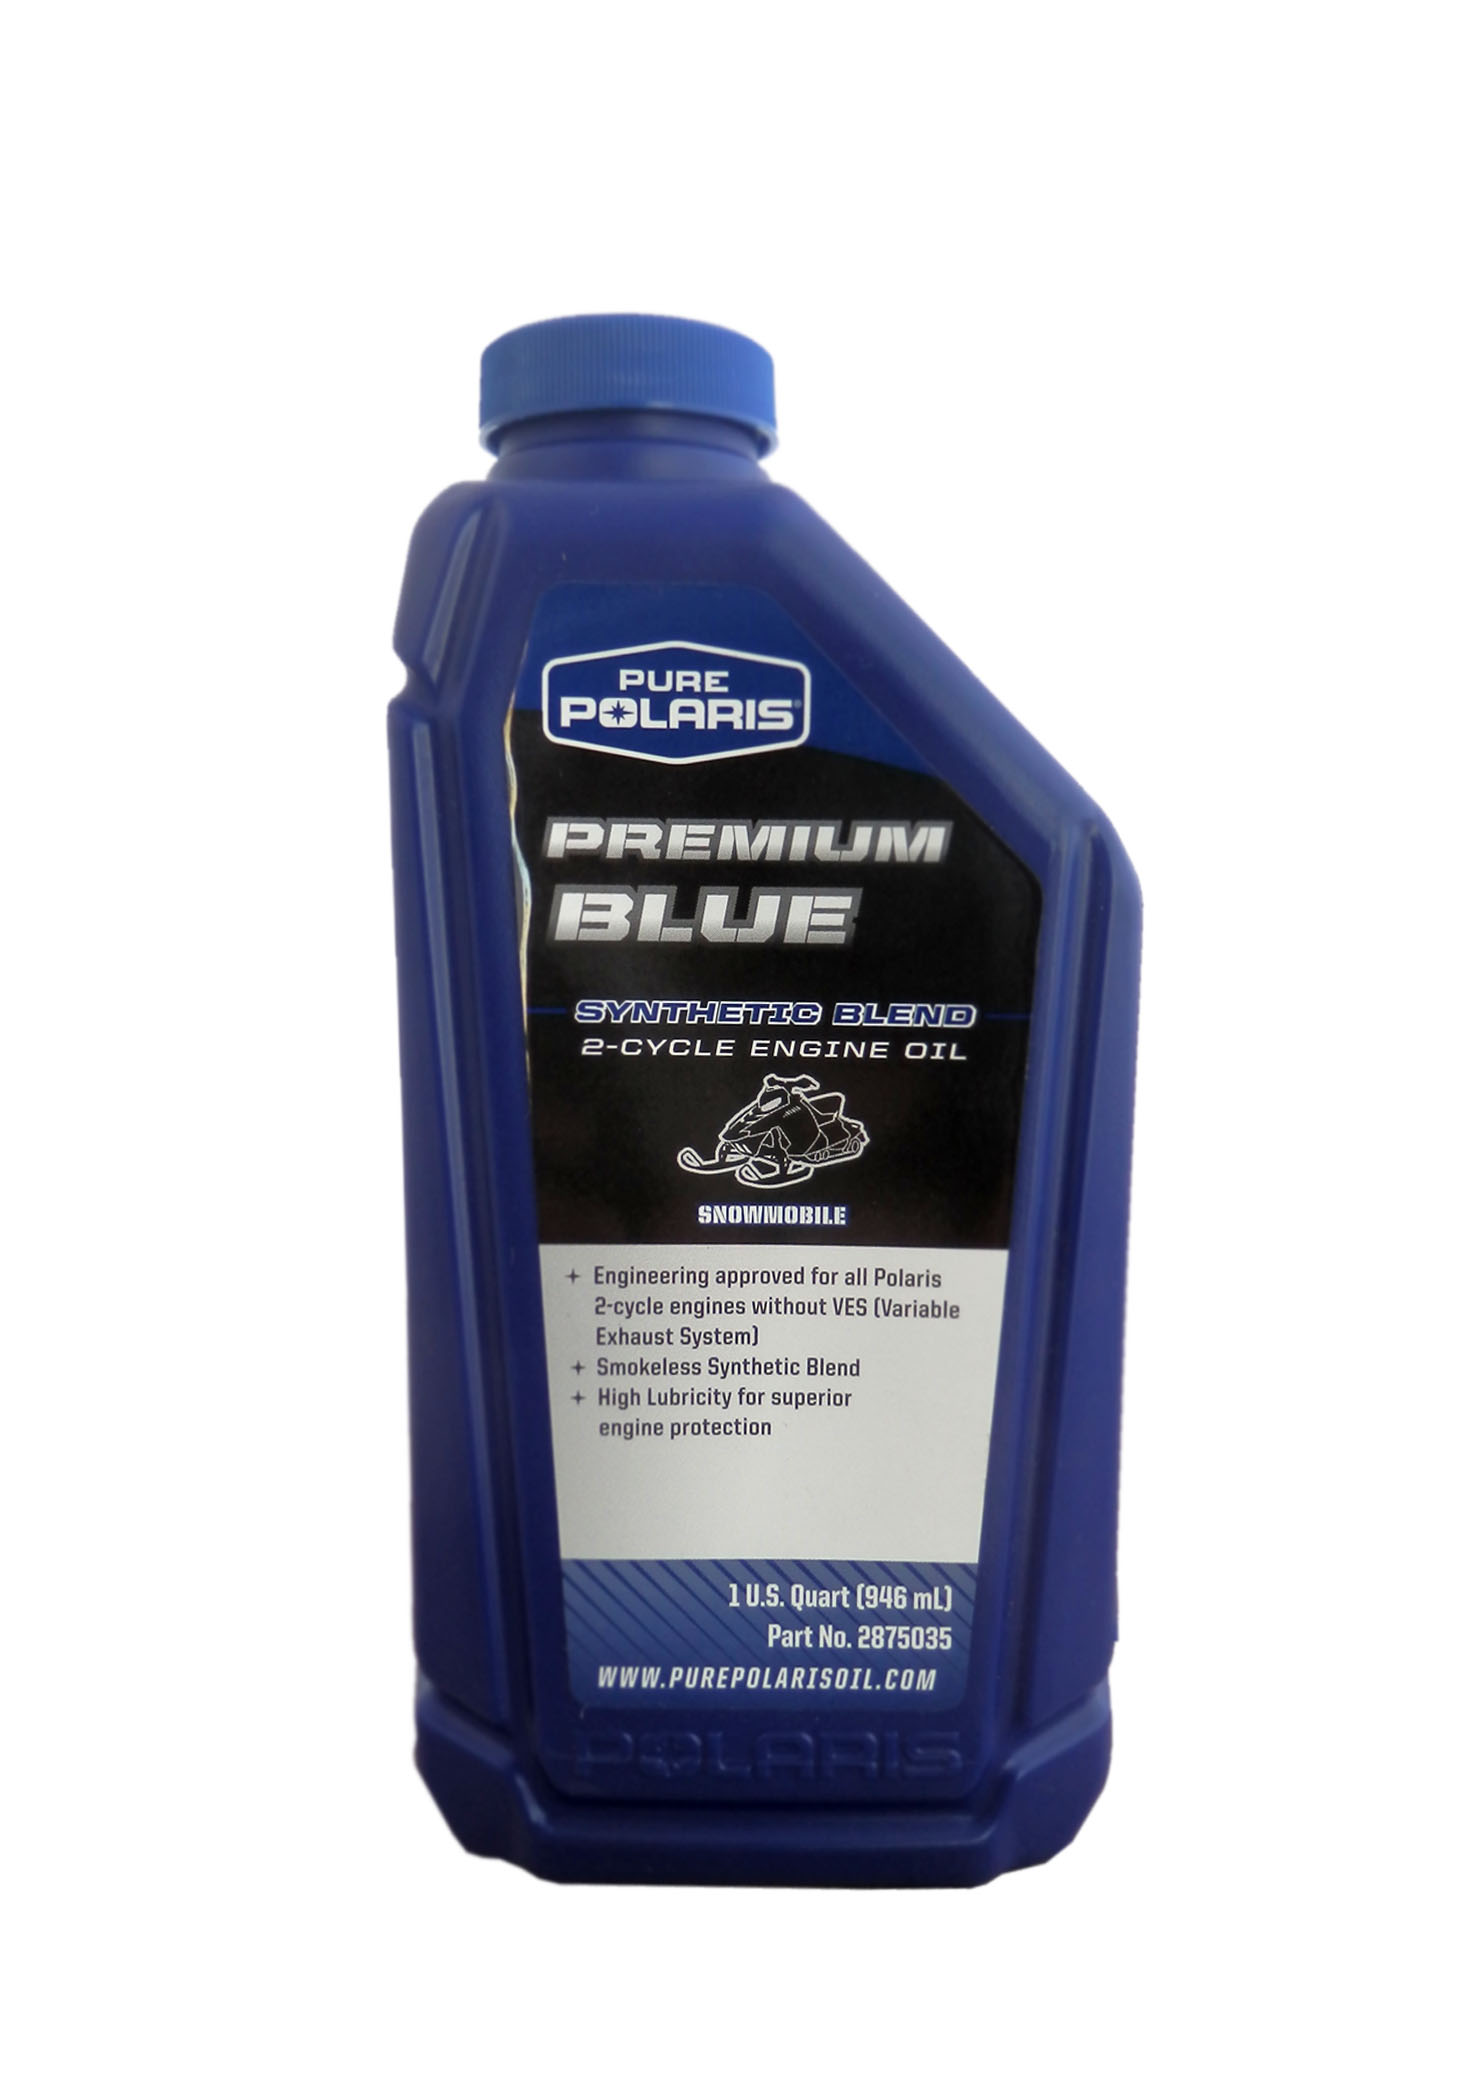 Моторное масло Polaris 2875035 Premium BLUE Synthetic Blend 2-Cycle Enginе Oil  0.946 л